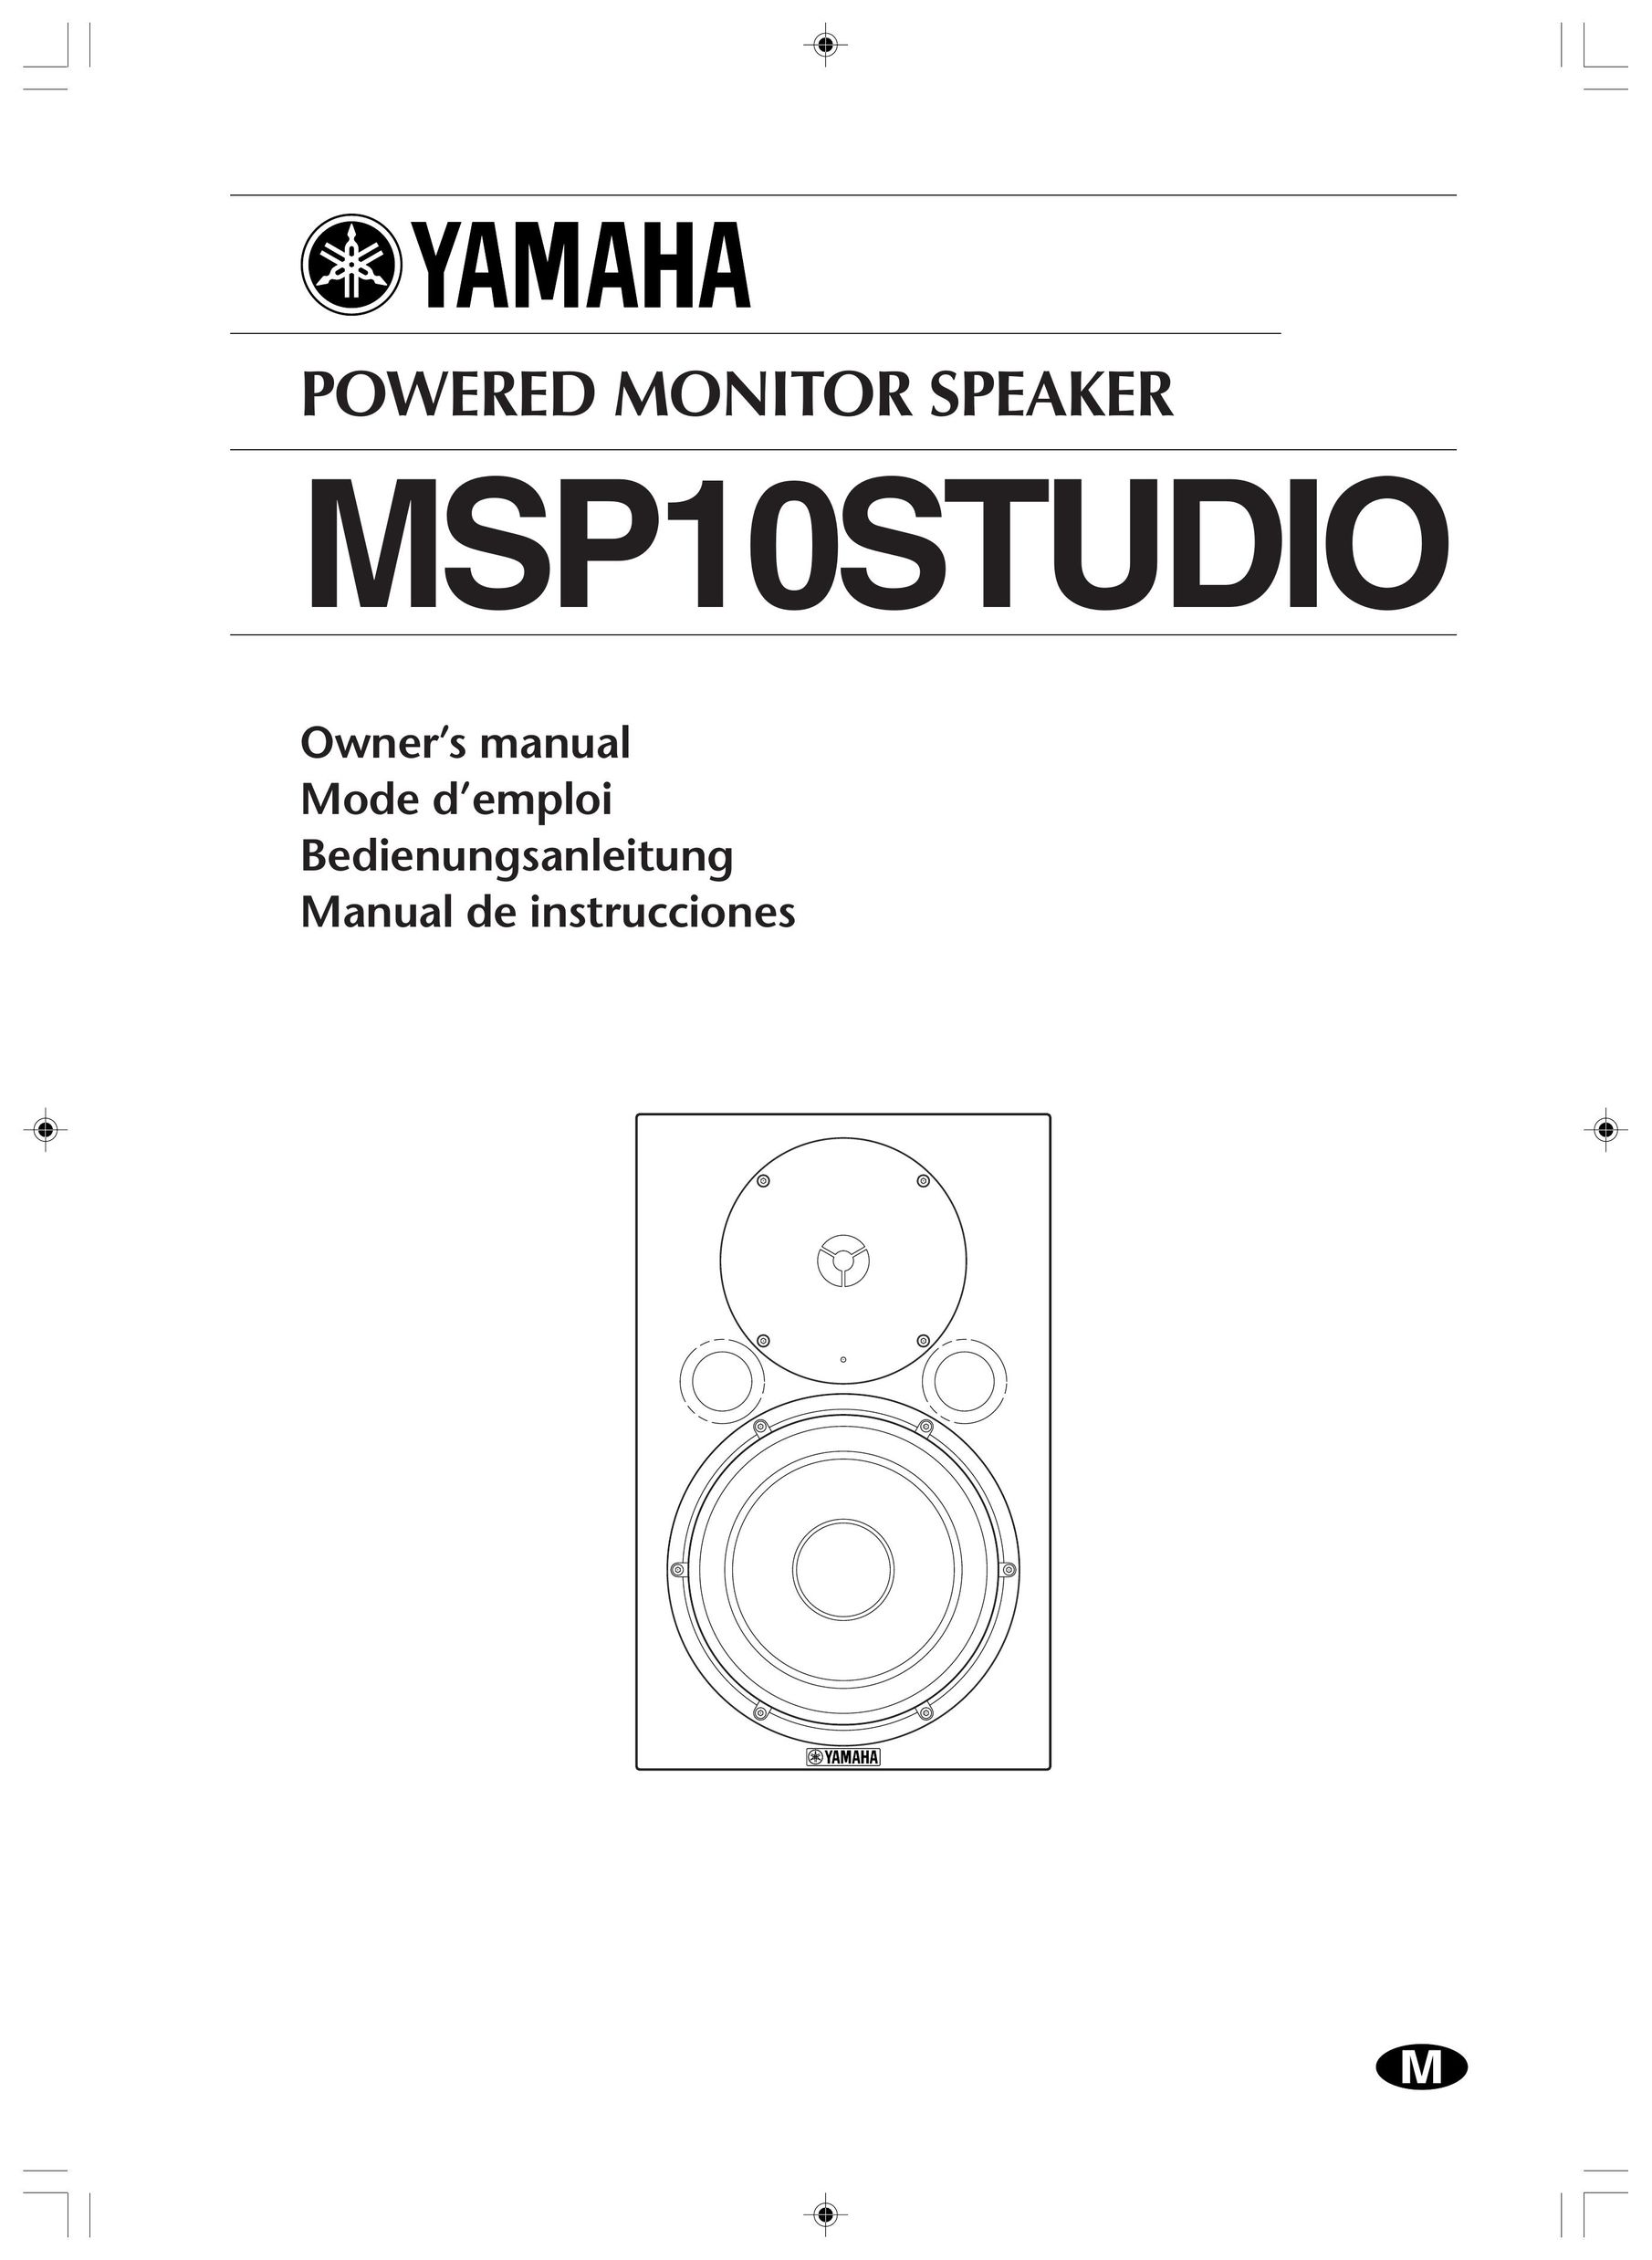 Yamaha MSP10 Studio Speaker User Manual